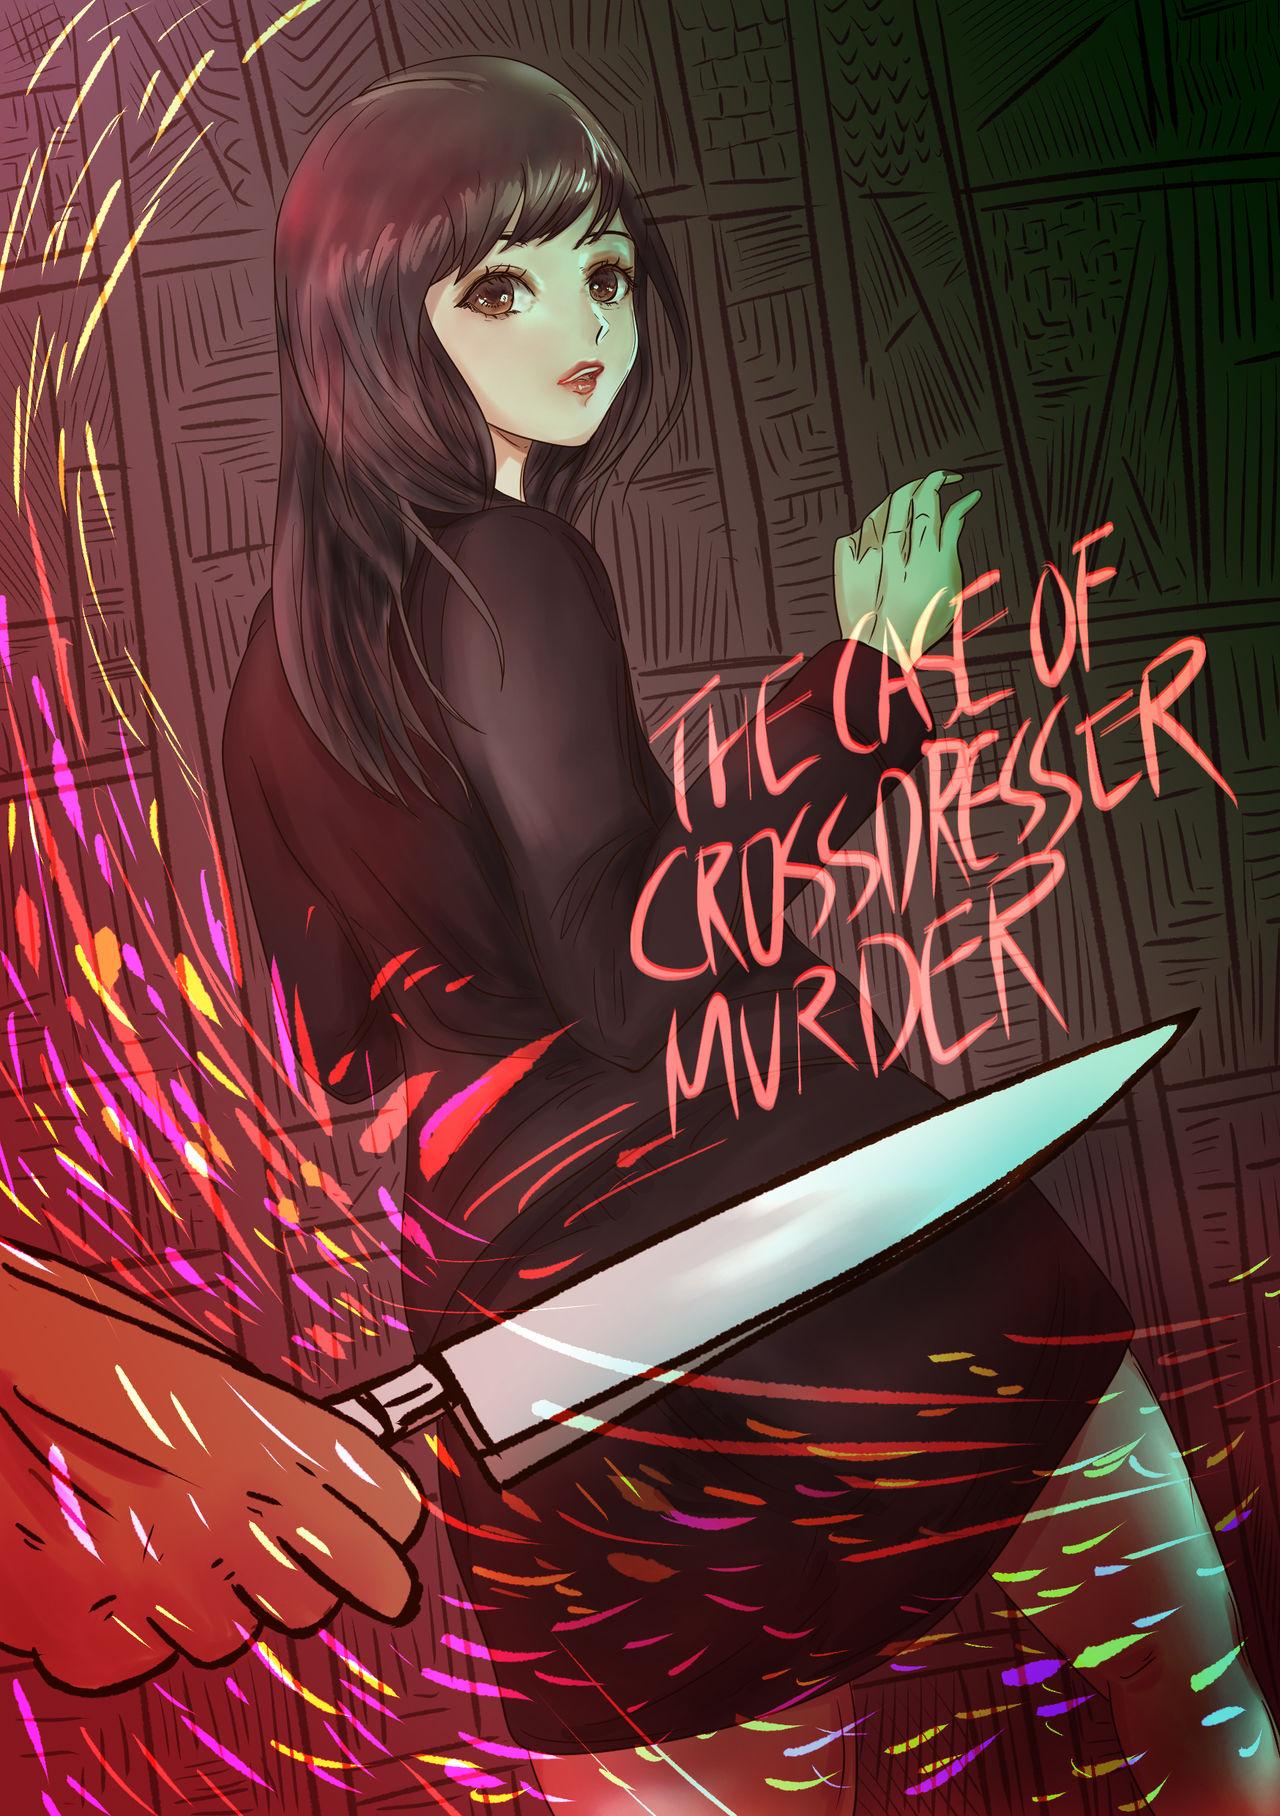 The case of crossdresser murderi(ENG)女装男子殺人事件 1